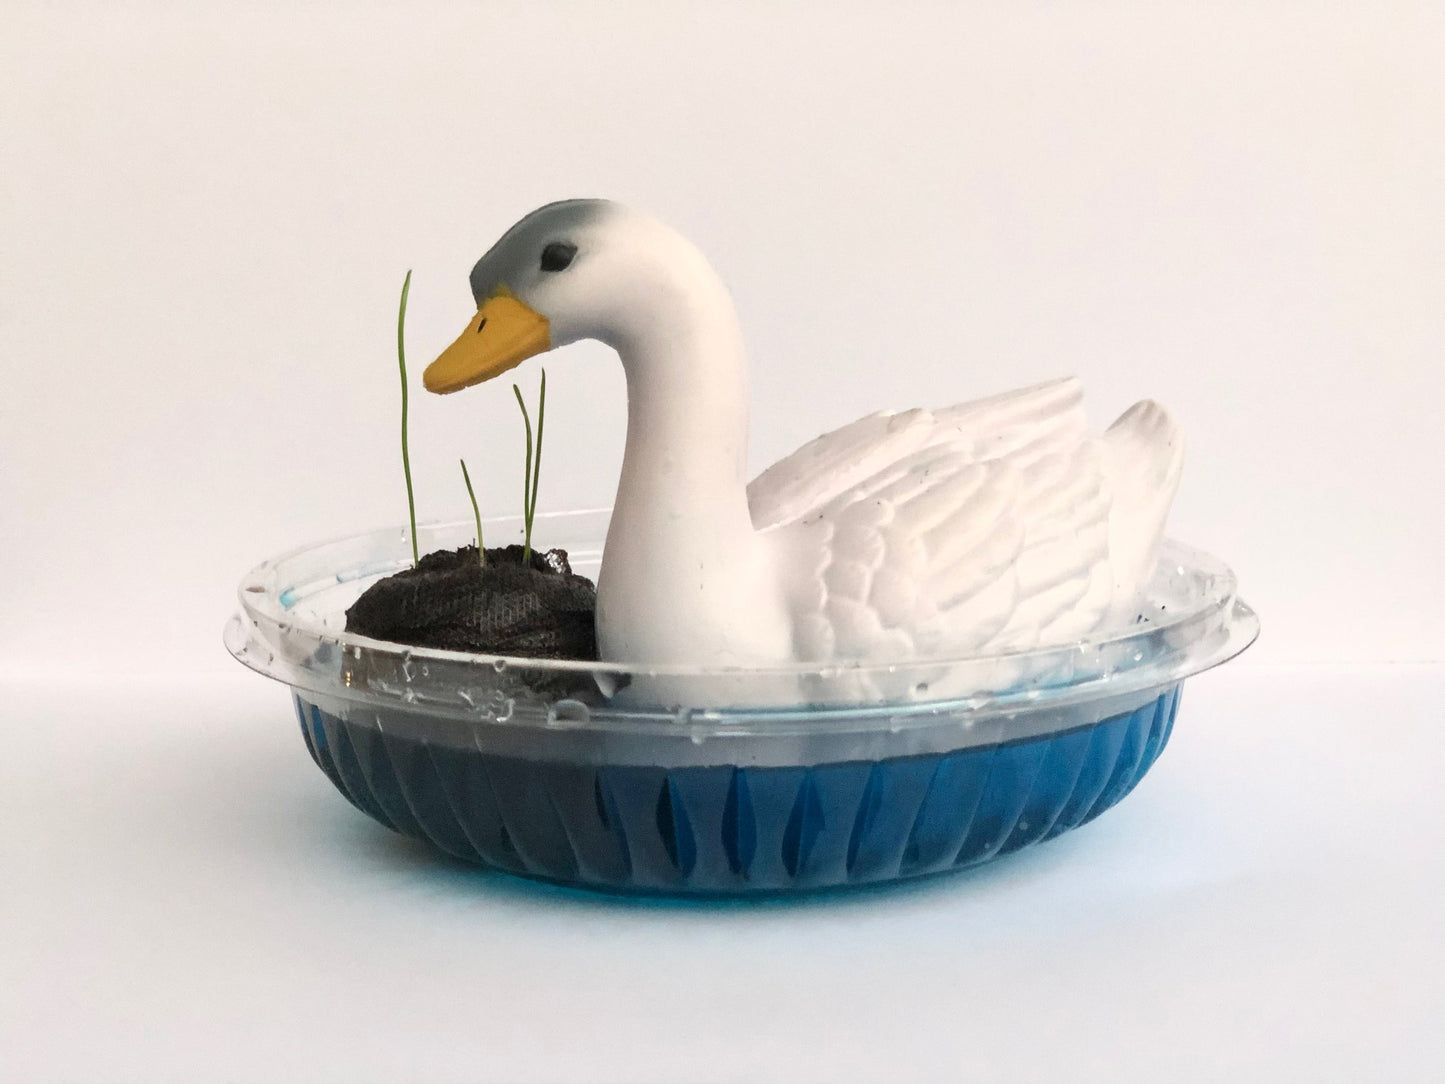 Swan habitat science experiment for kids